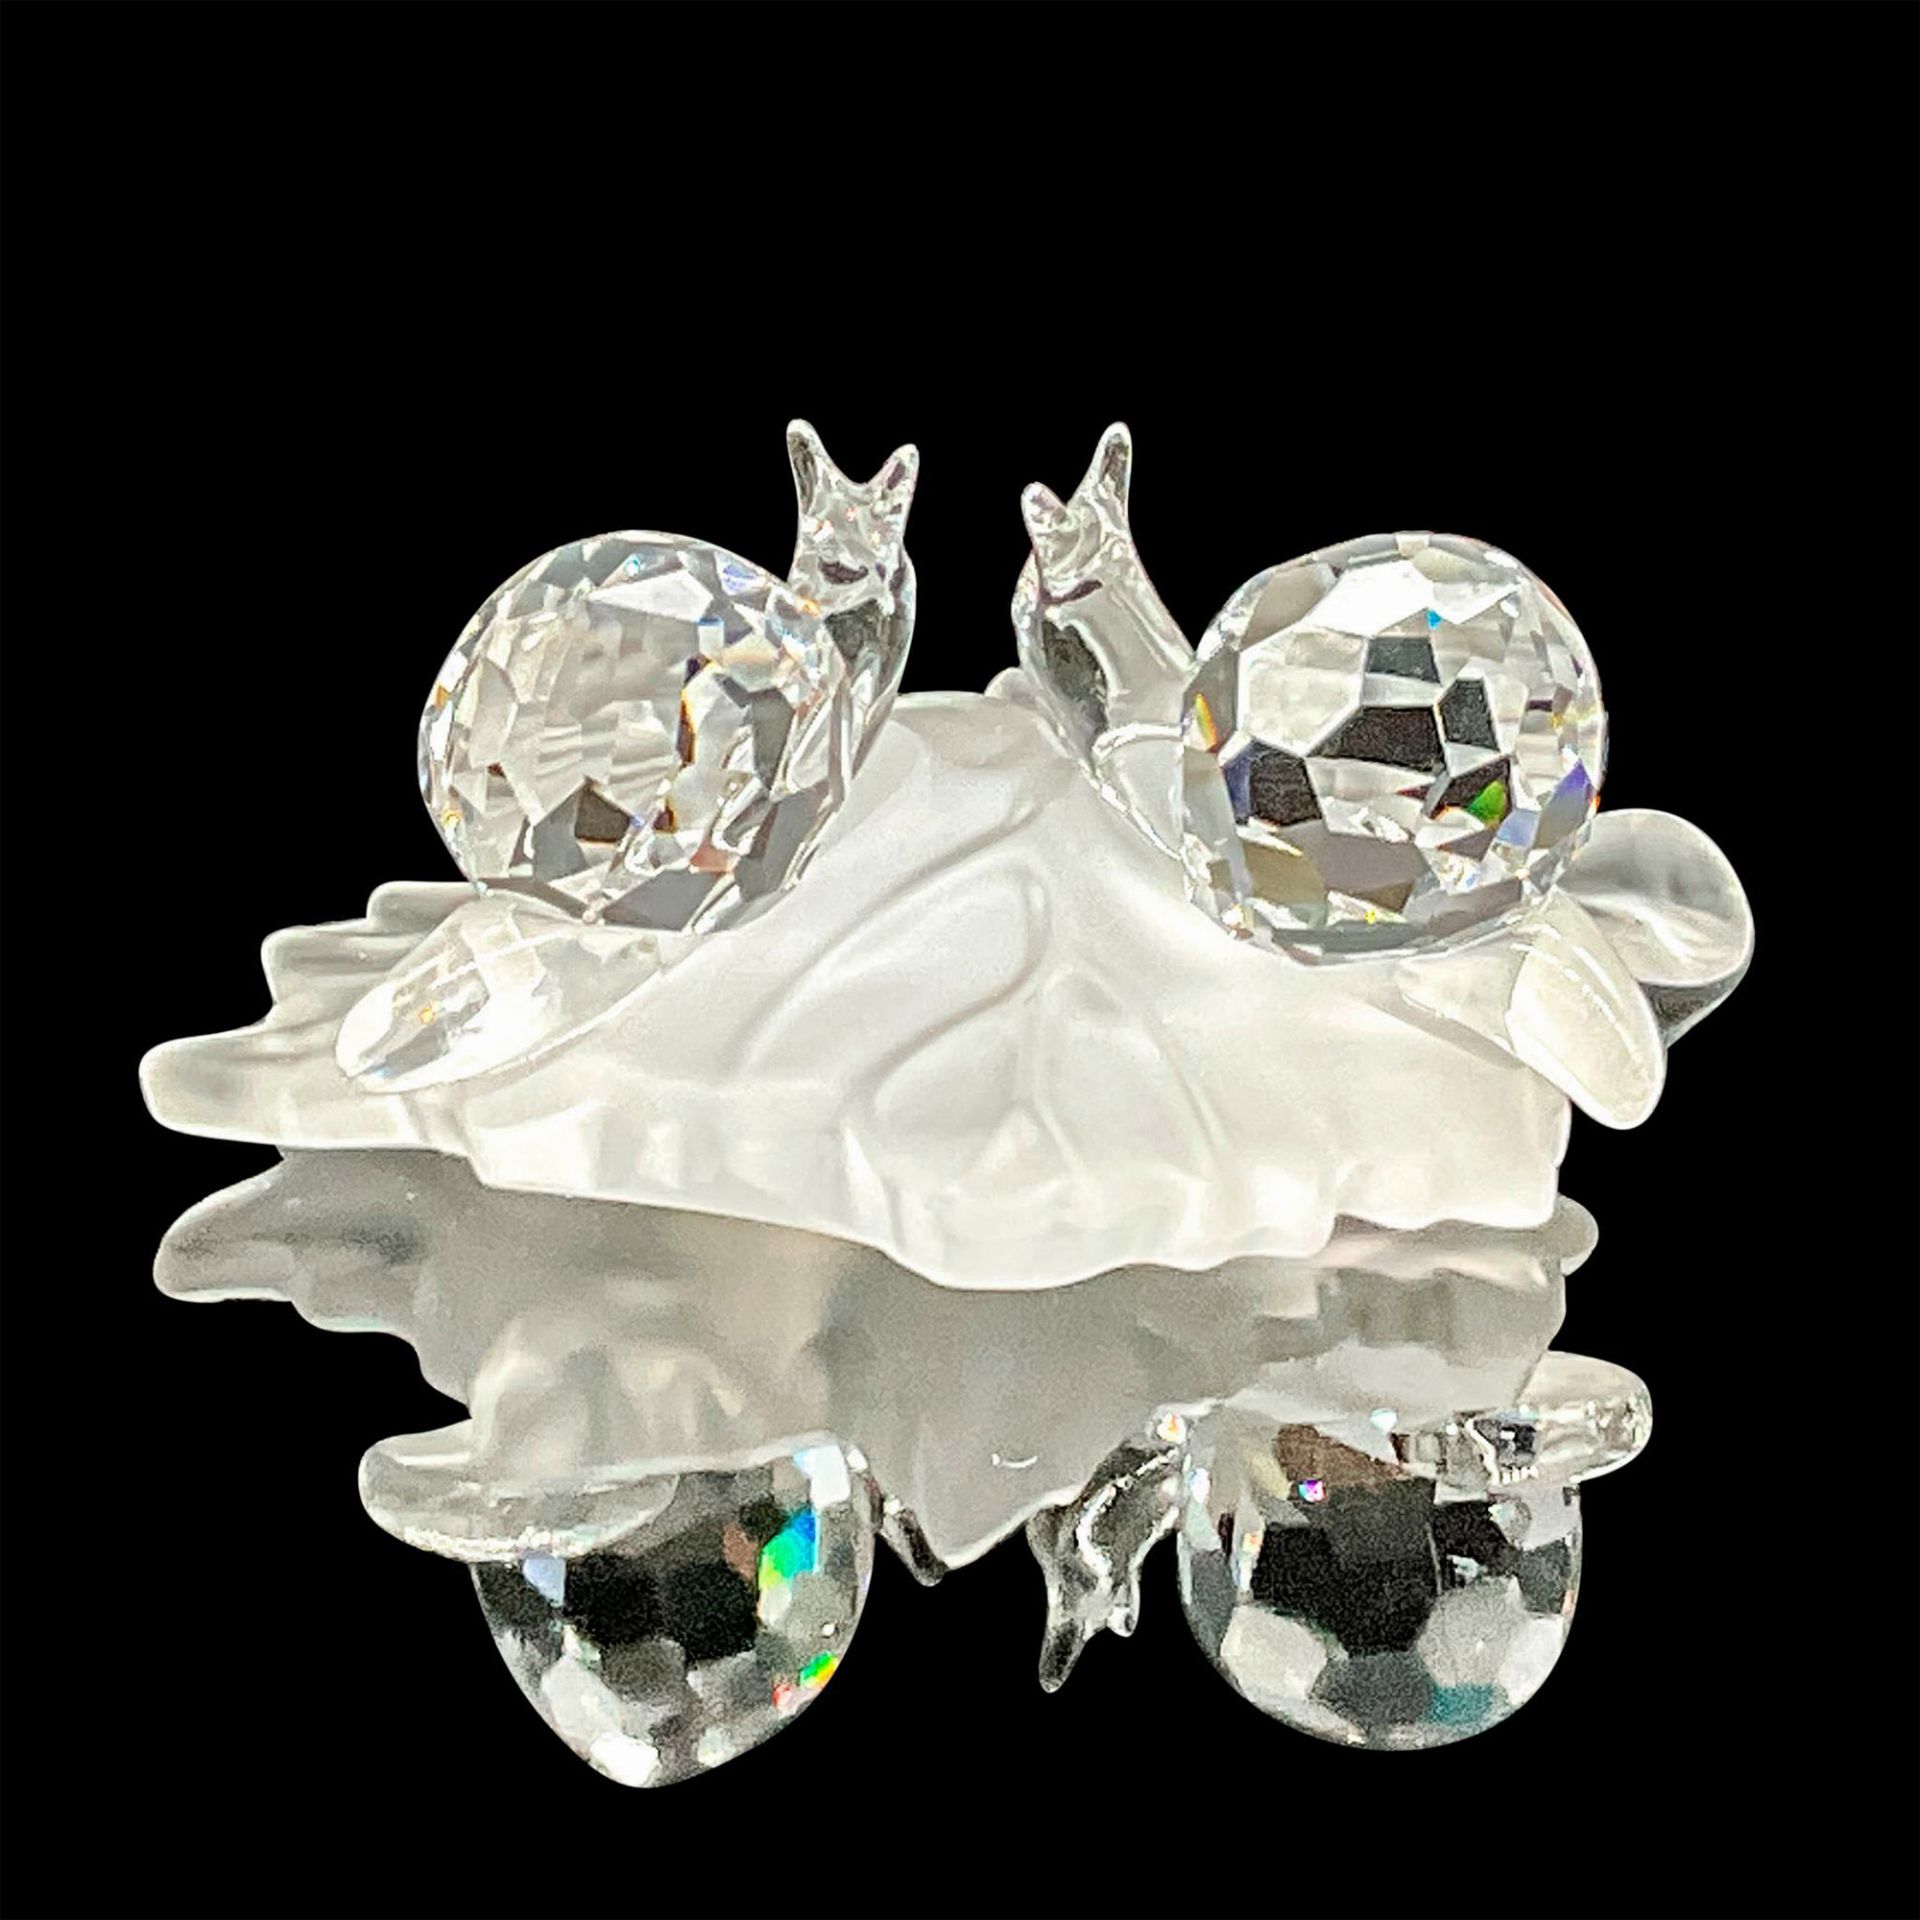 Swarovski Silver Crystal Figurine, Snail Babies - Image 2 of 3